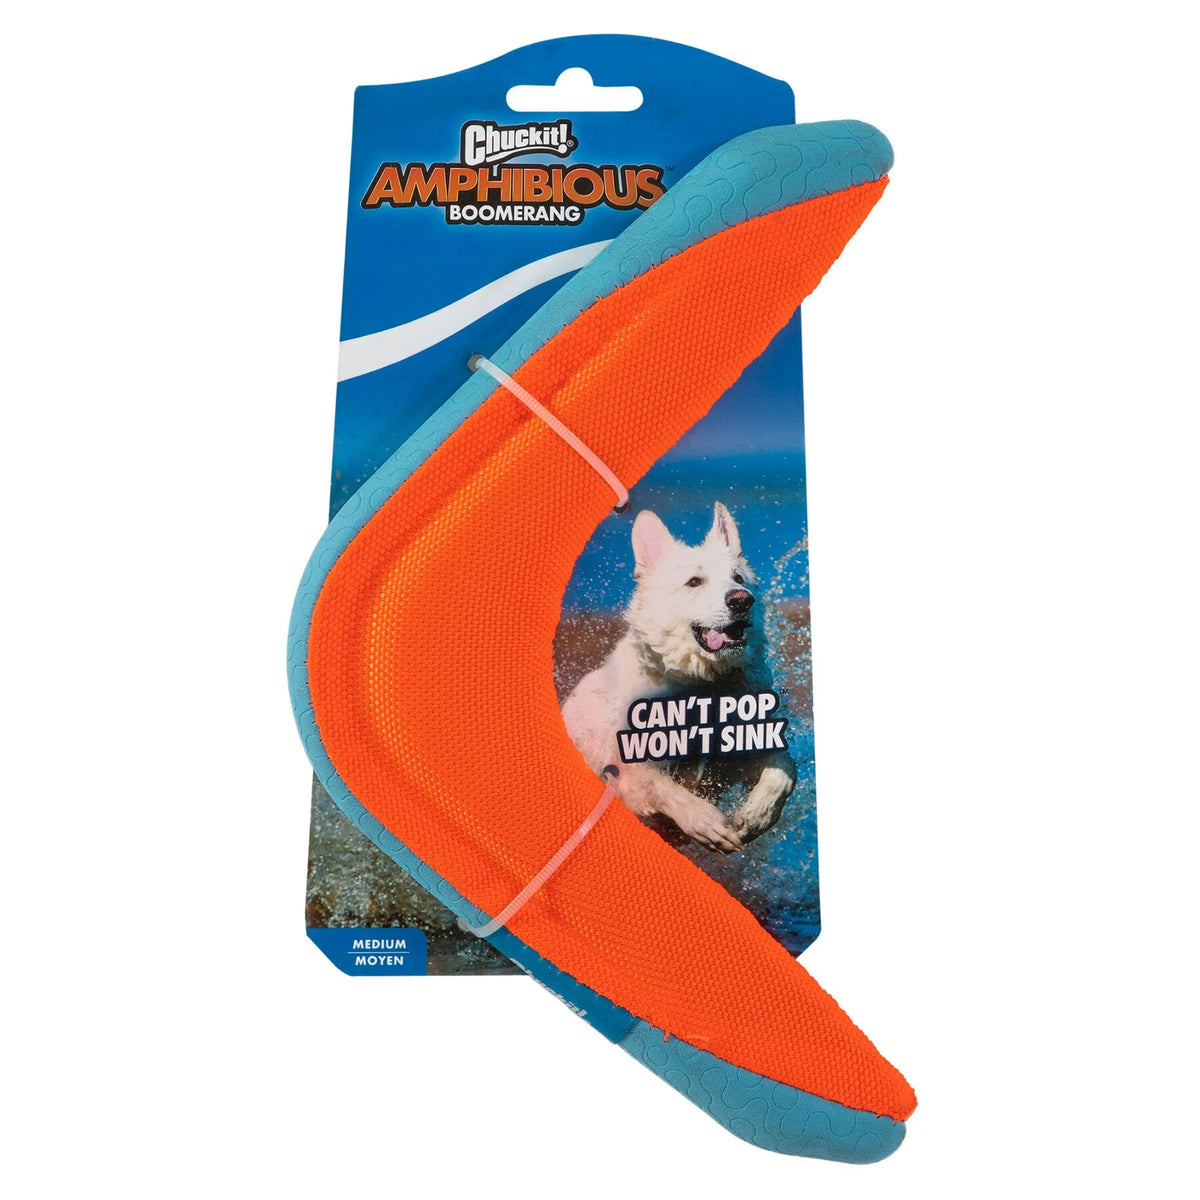 Amphibious Boomerang Dog Toy